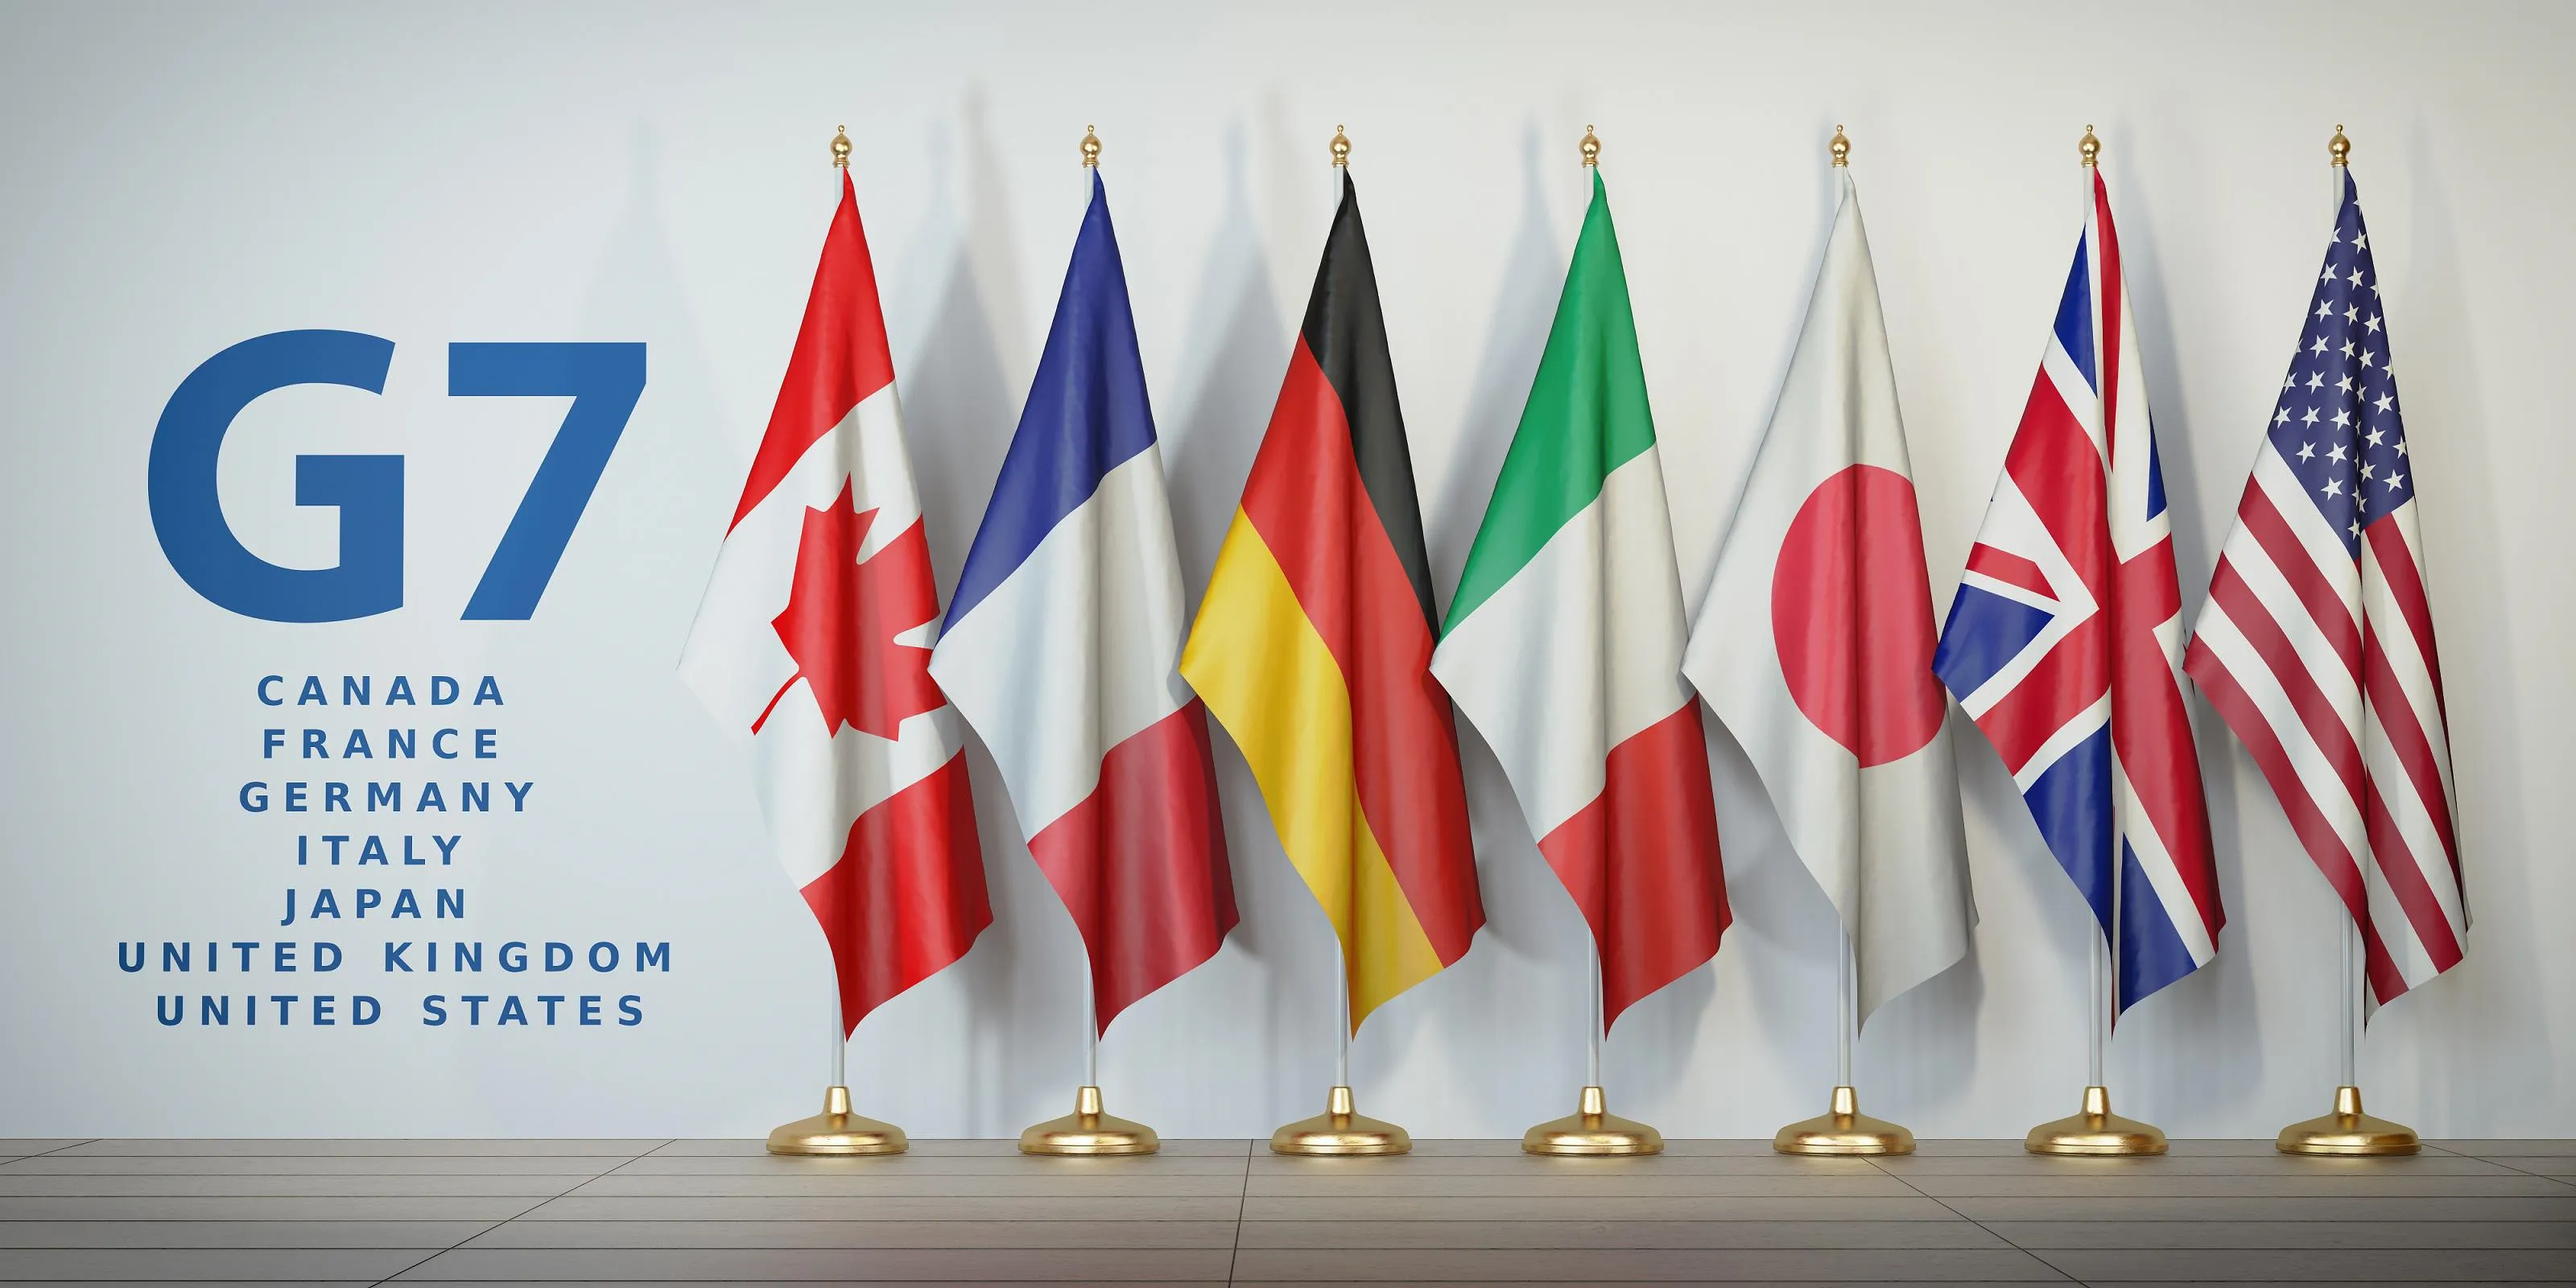 G7 Summit Flags